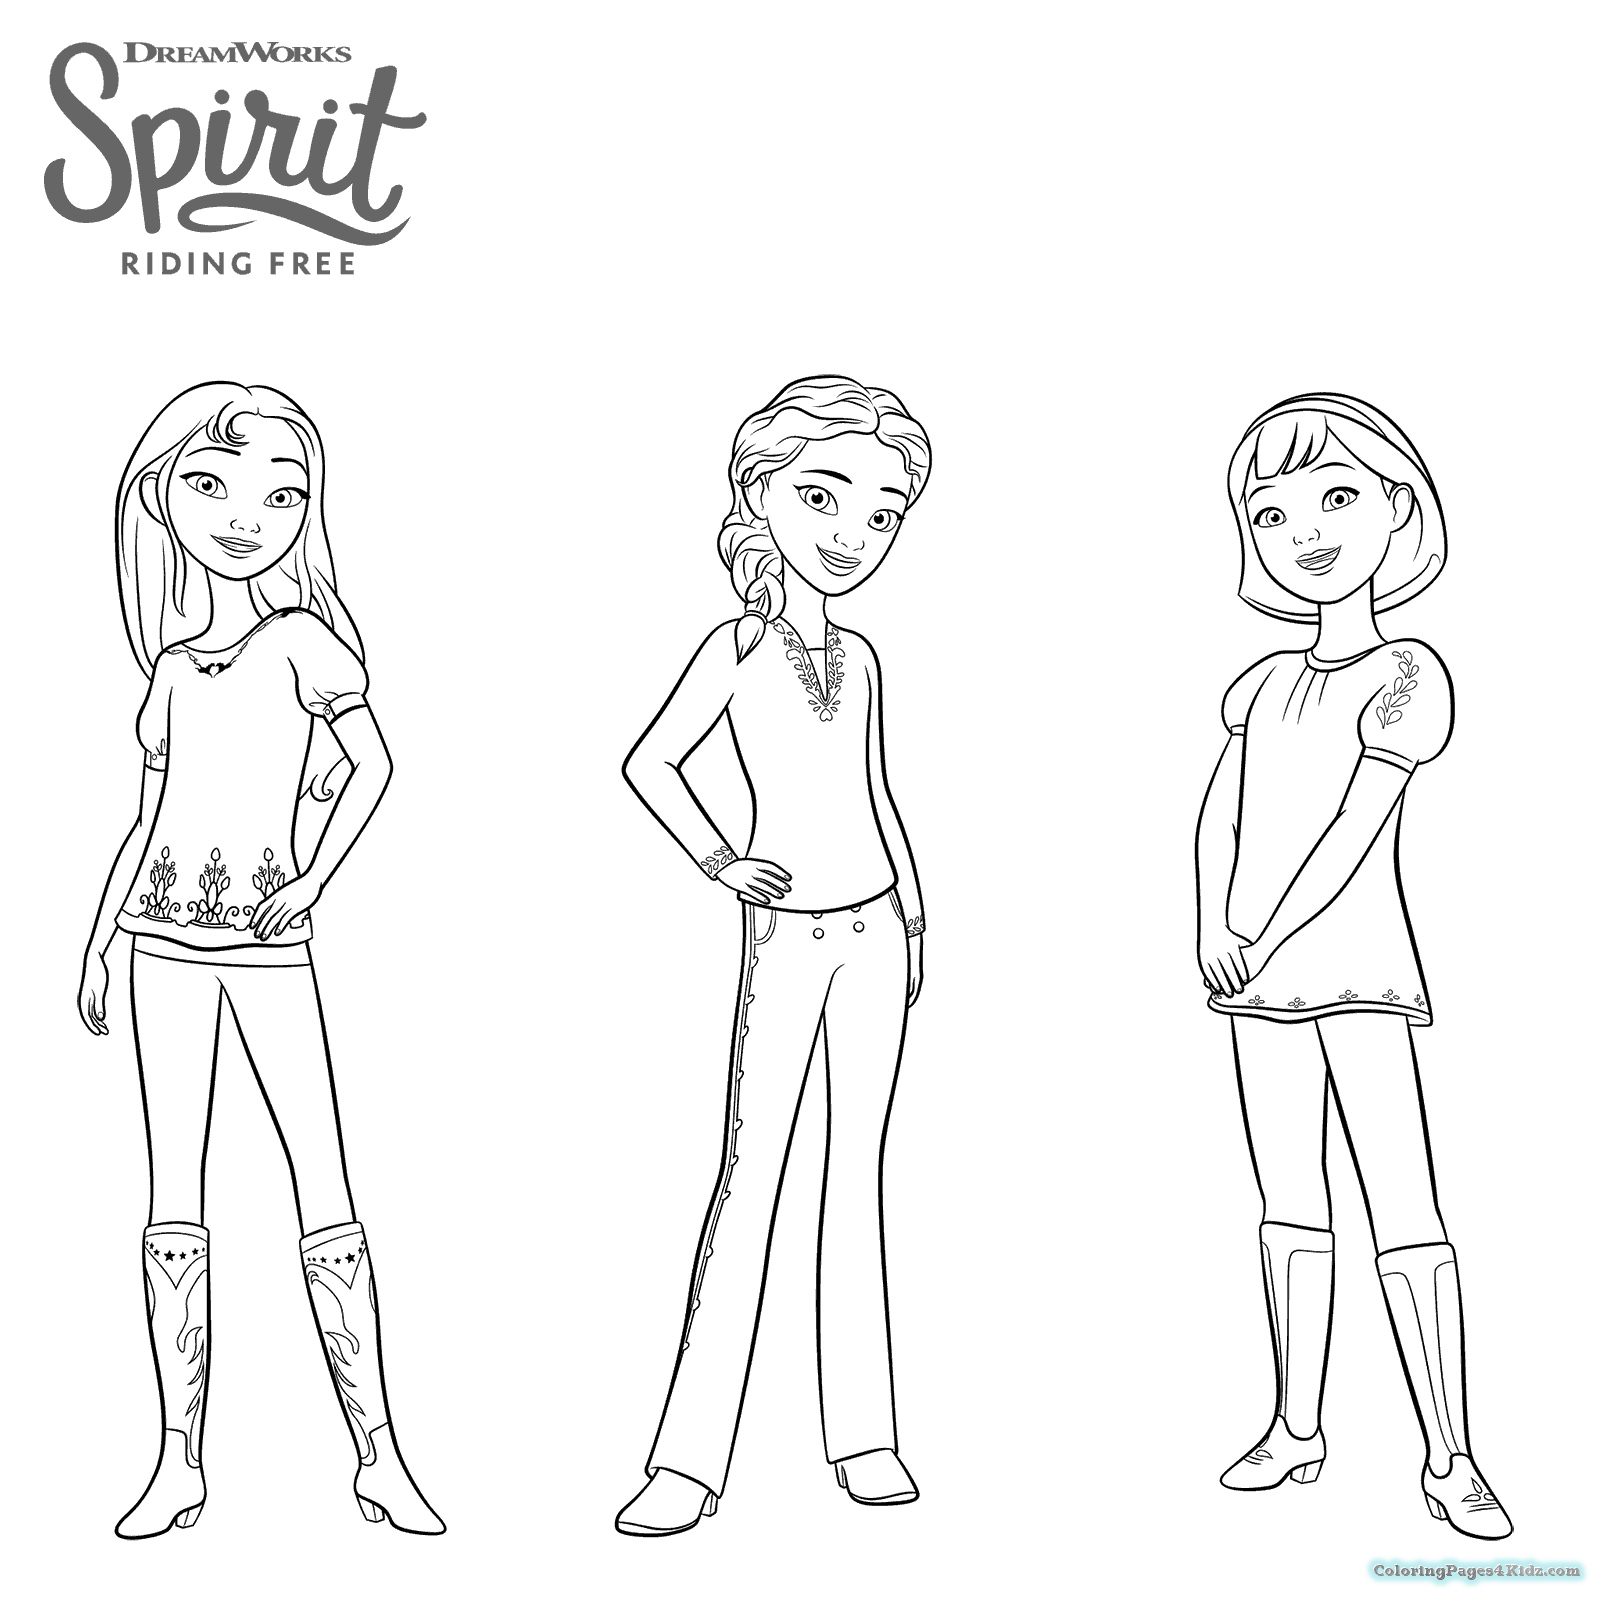 coloring pages free spirit spirit riding free coloring pages coloring pages for kids spirit coloring free pages 